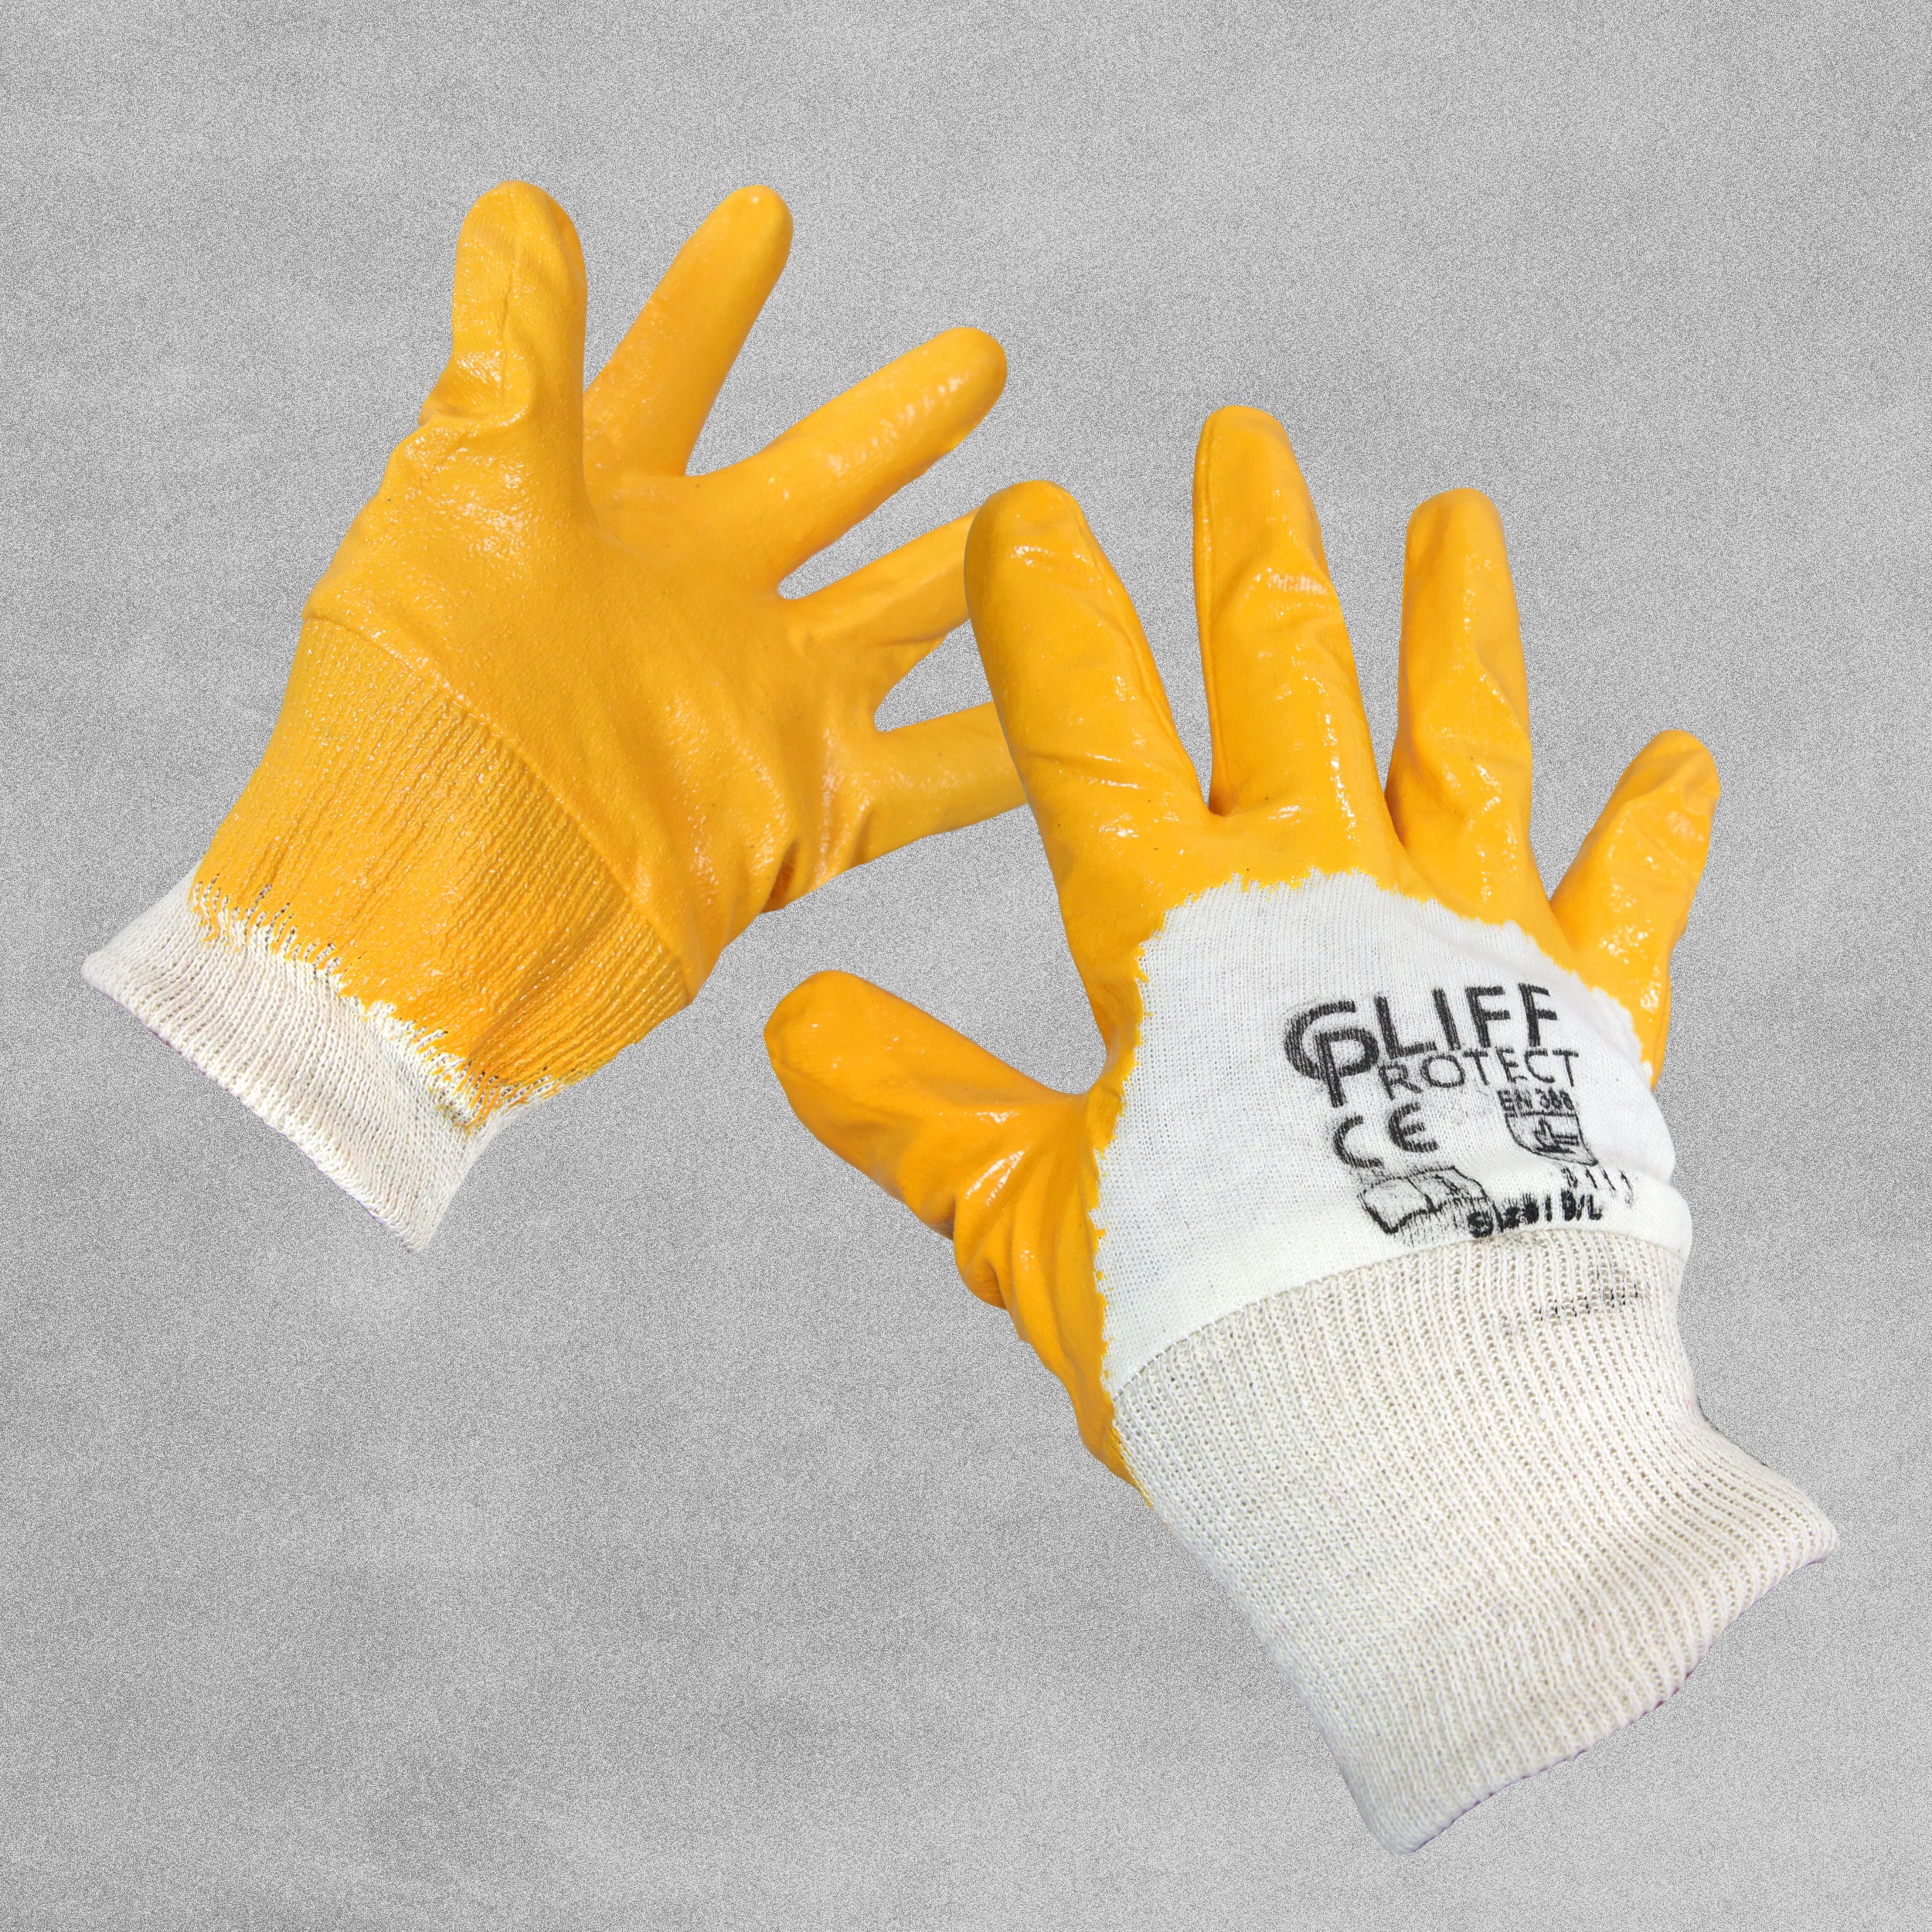 Nitrile 3/4 Coated Work Gloves - Pack of 10